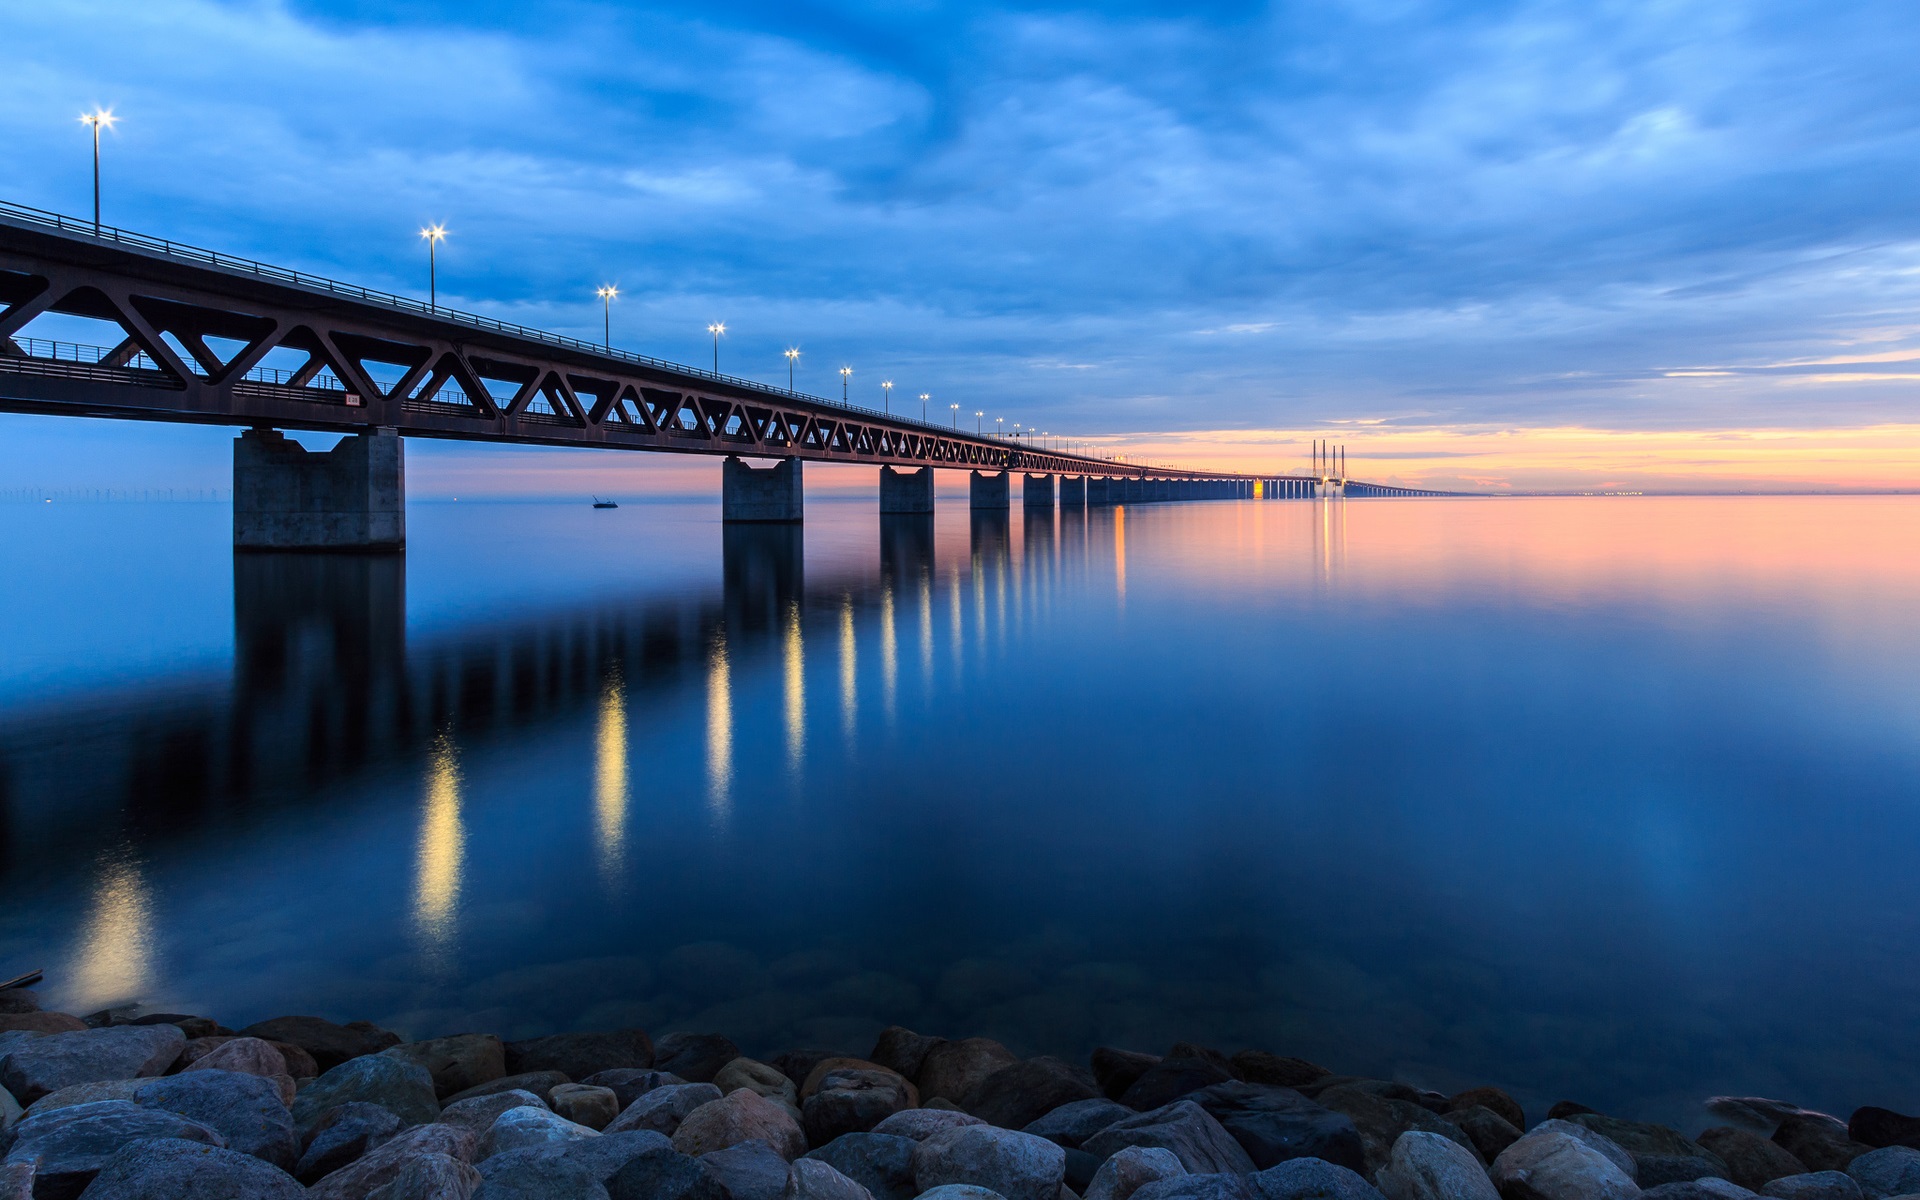 Download background blue, man made, bridge, horizon, ocean, sky, sweden, bridges